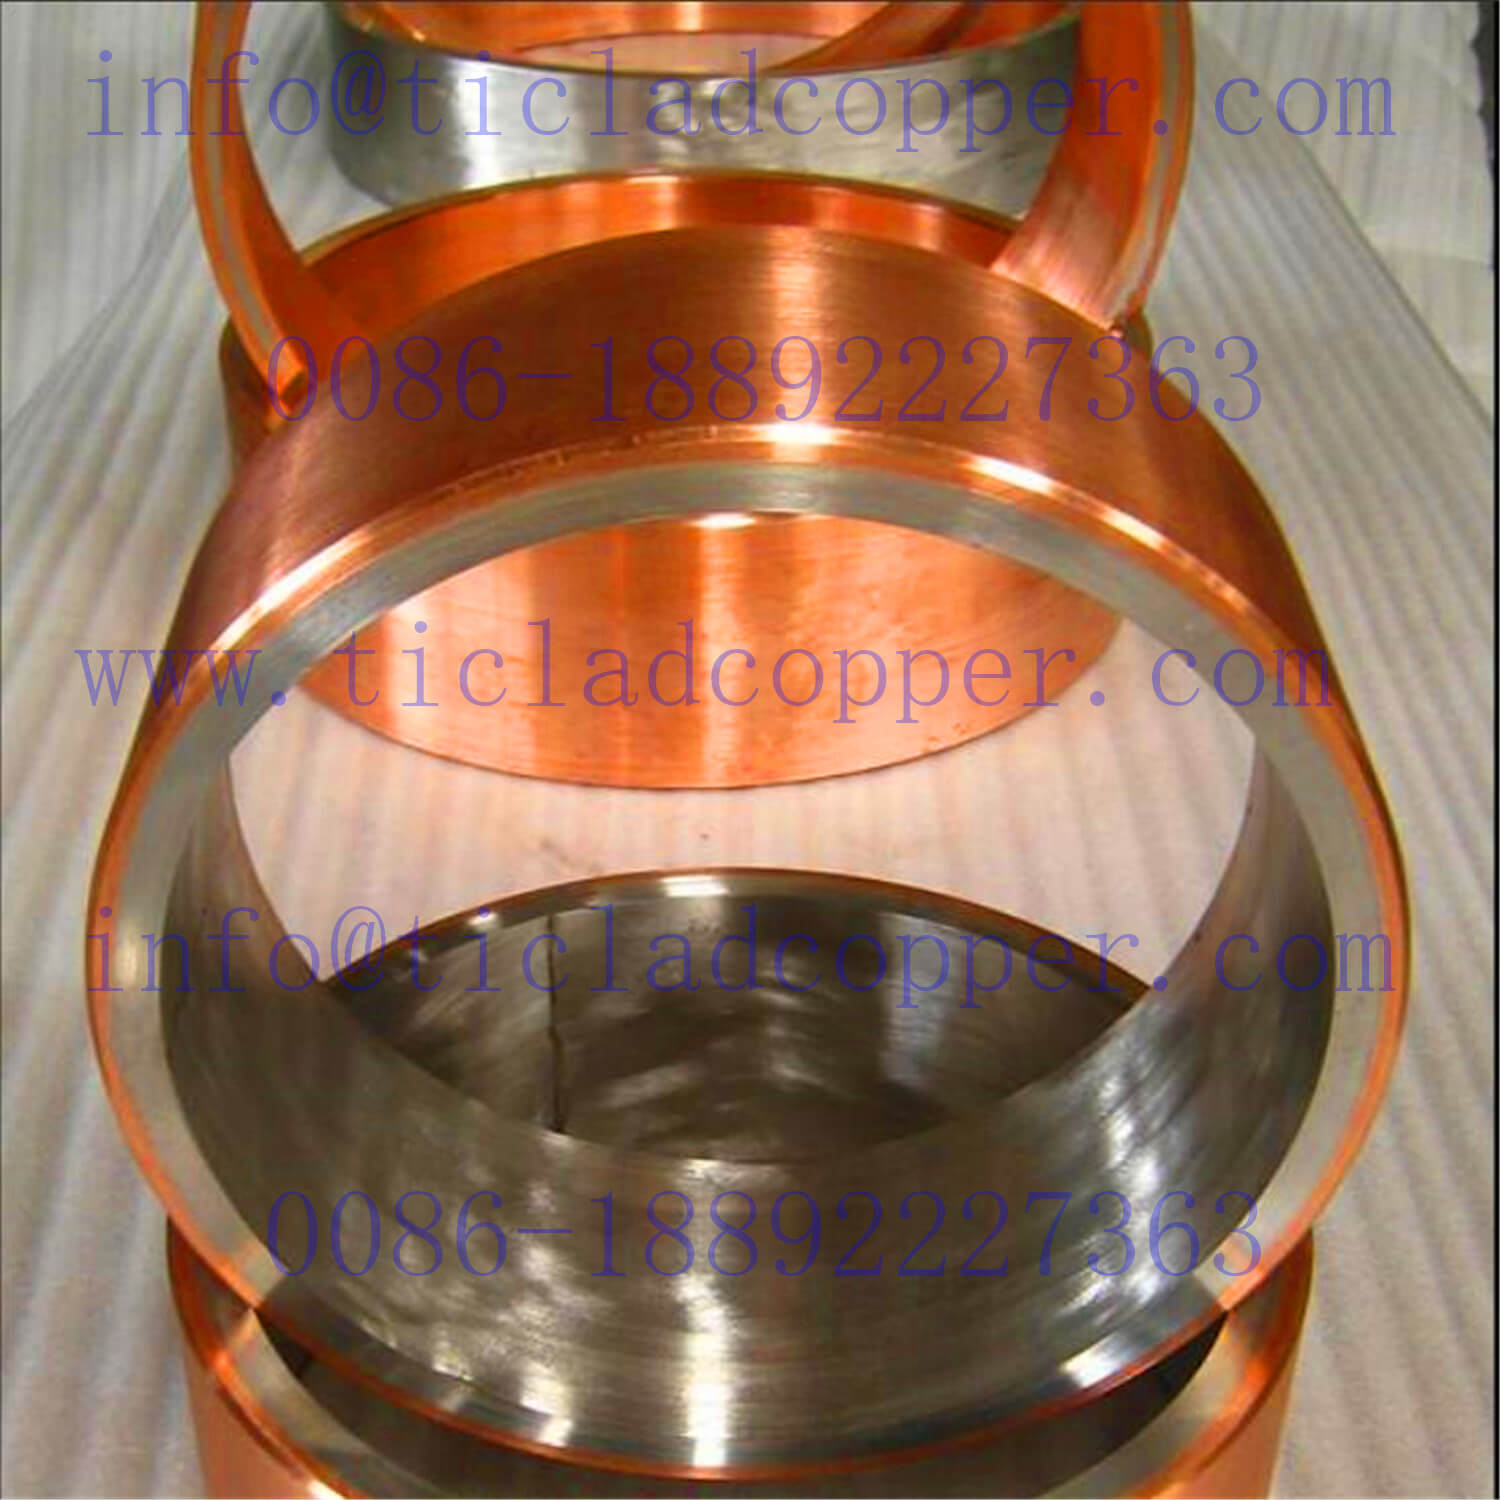 titanium clad copper bar, titanium clad copper rod, steel clad copper